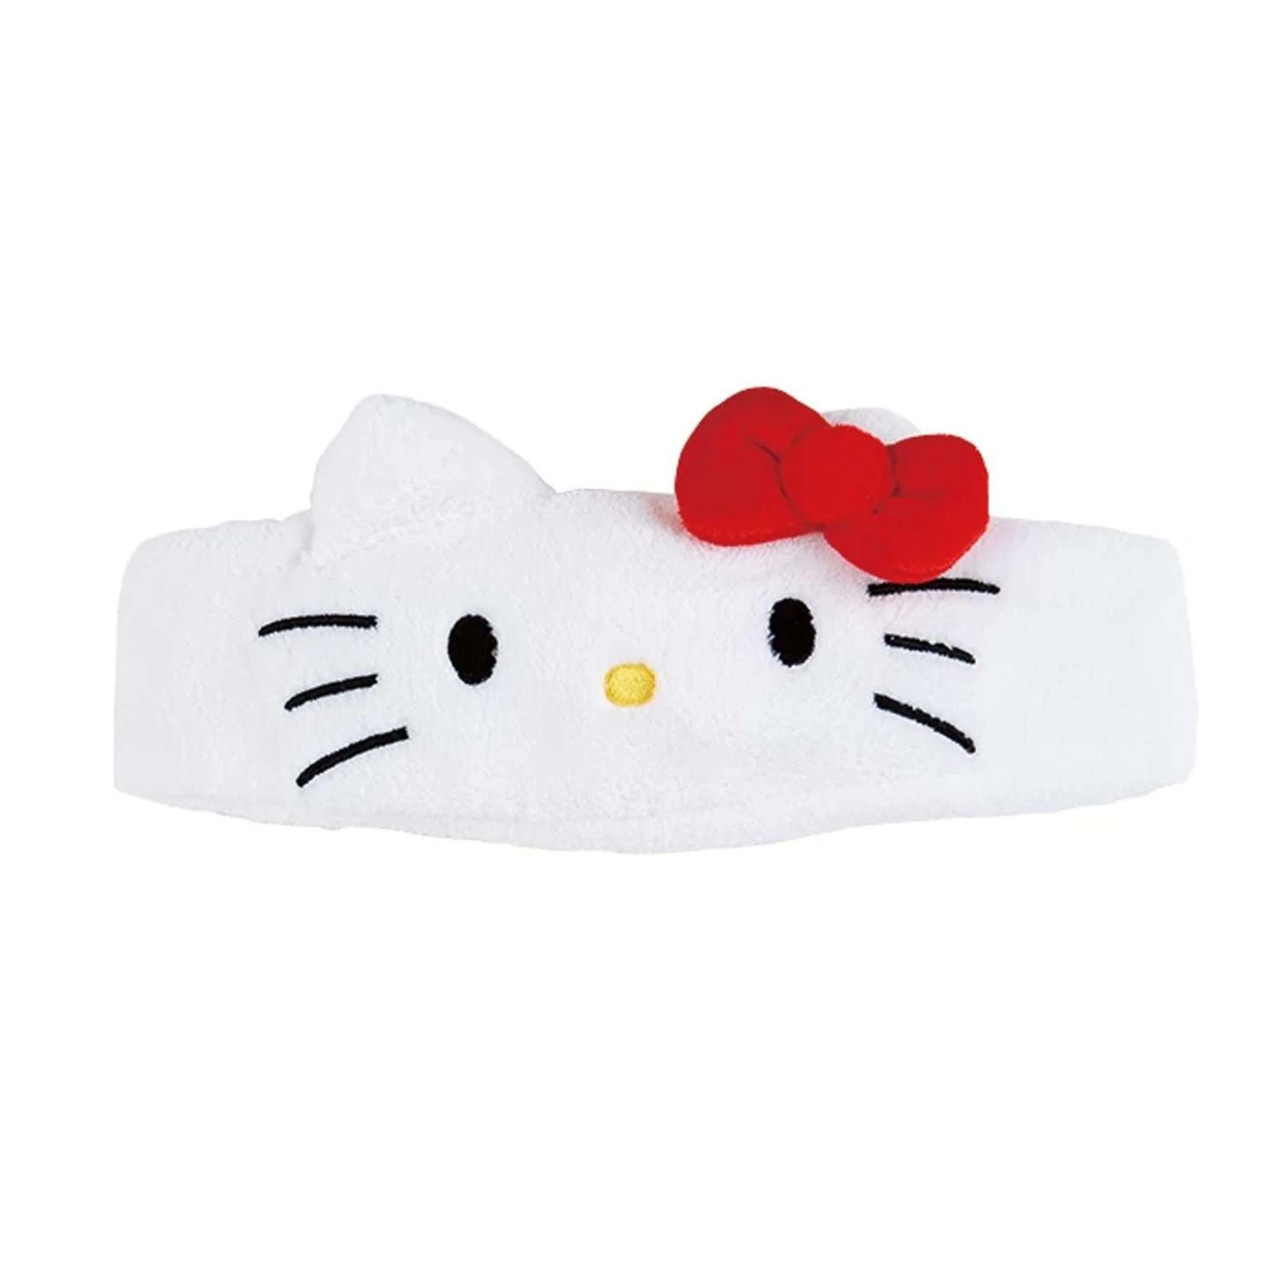 Hello Kitty Soft Mascot Plush with Loop